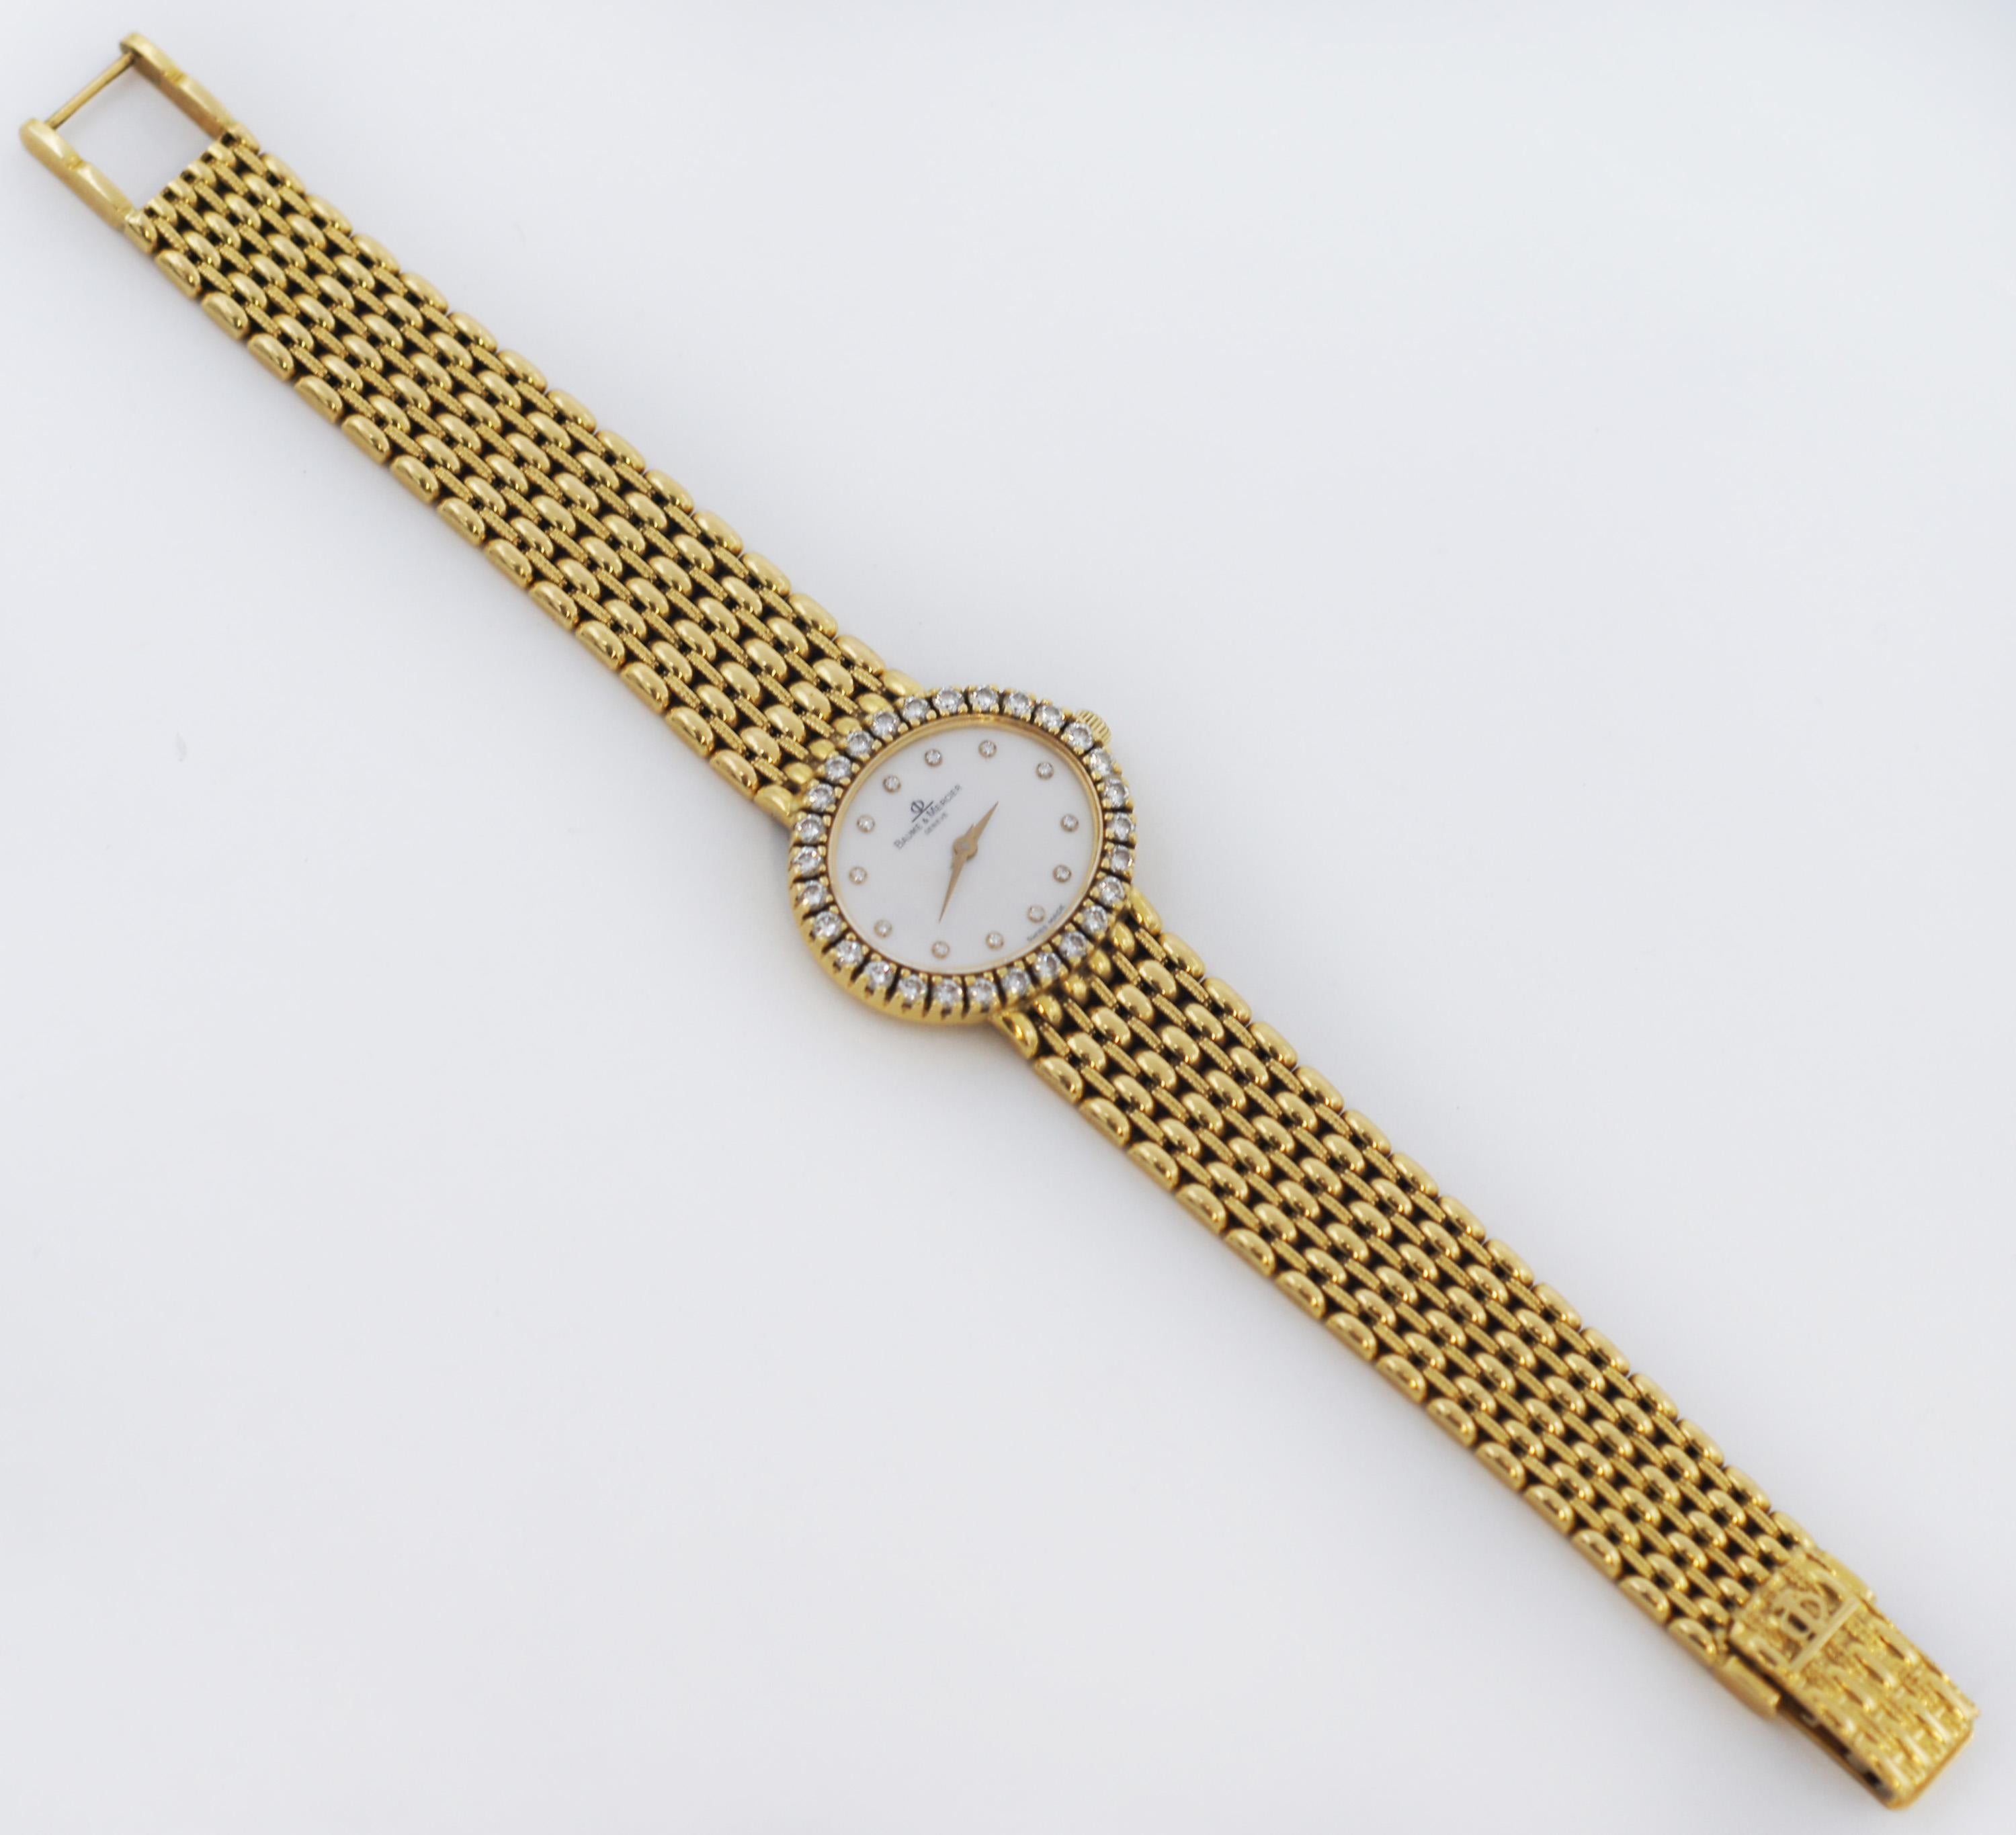 Brilliant Cut Baume & Mercier 18k Gold Diamond Watch 18310 9